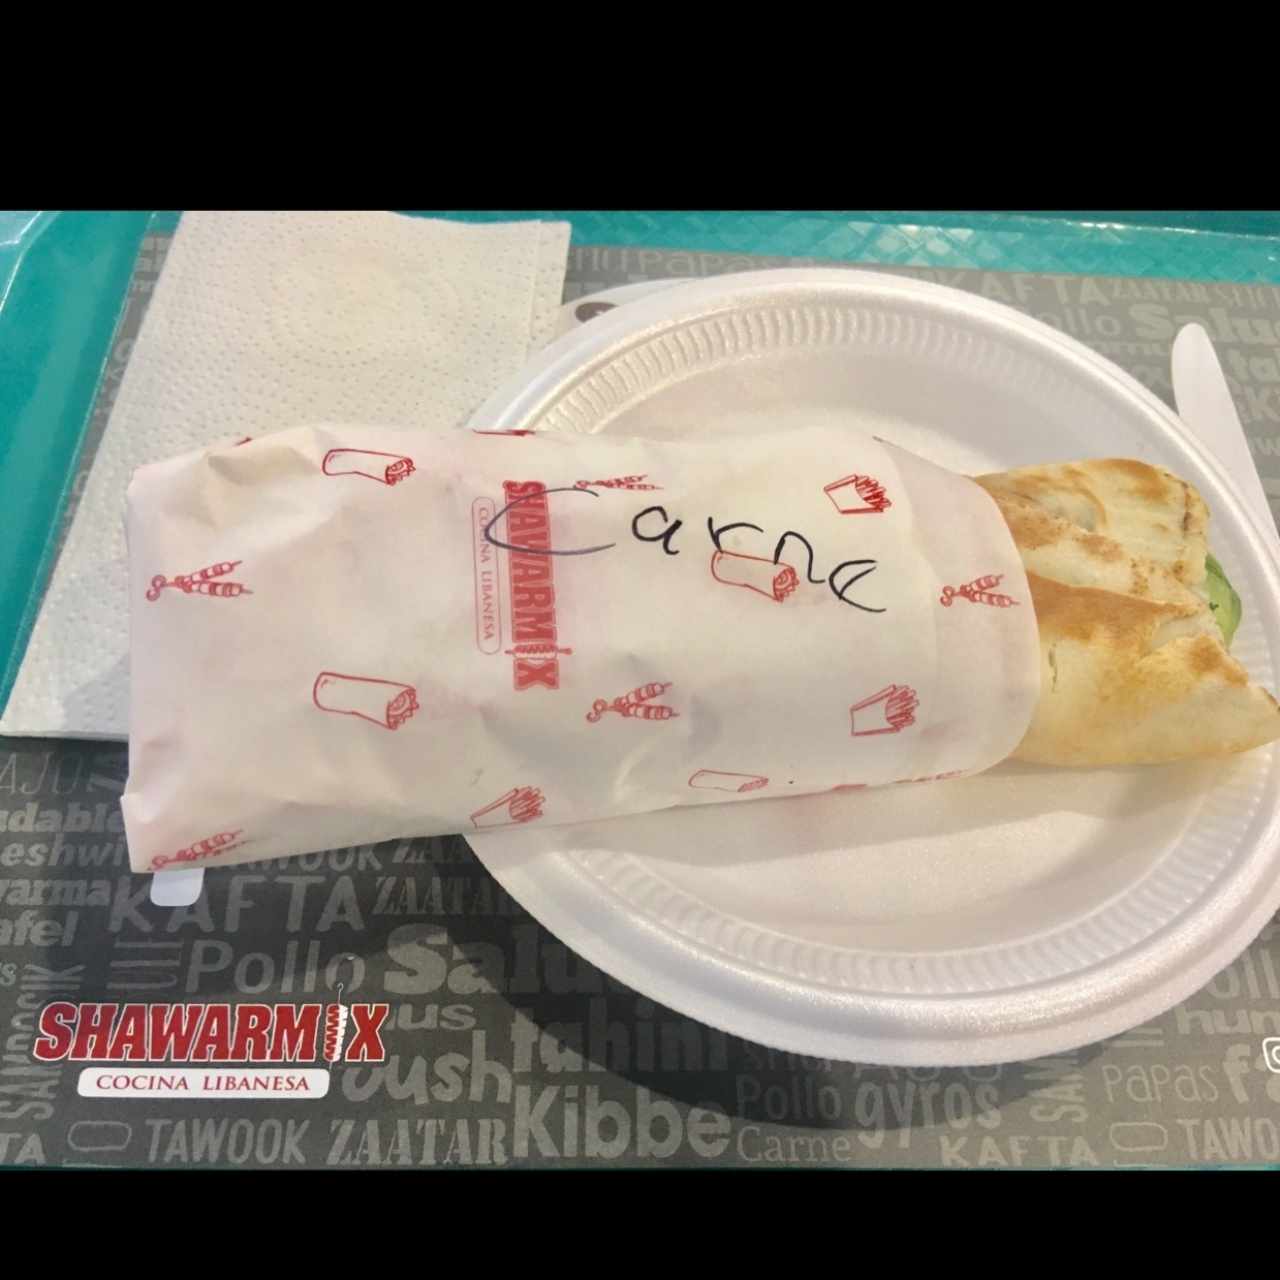 Shawarma 